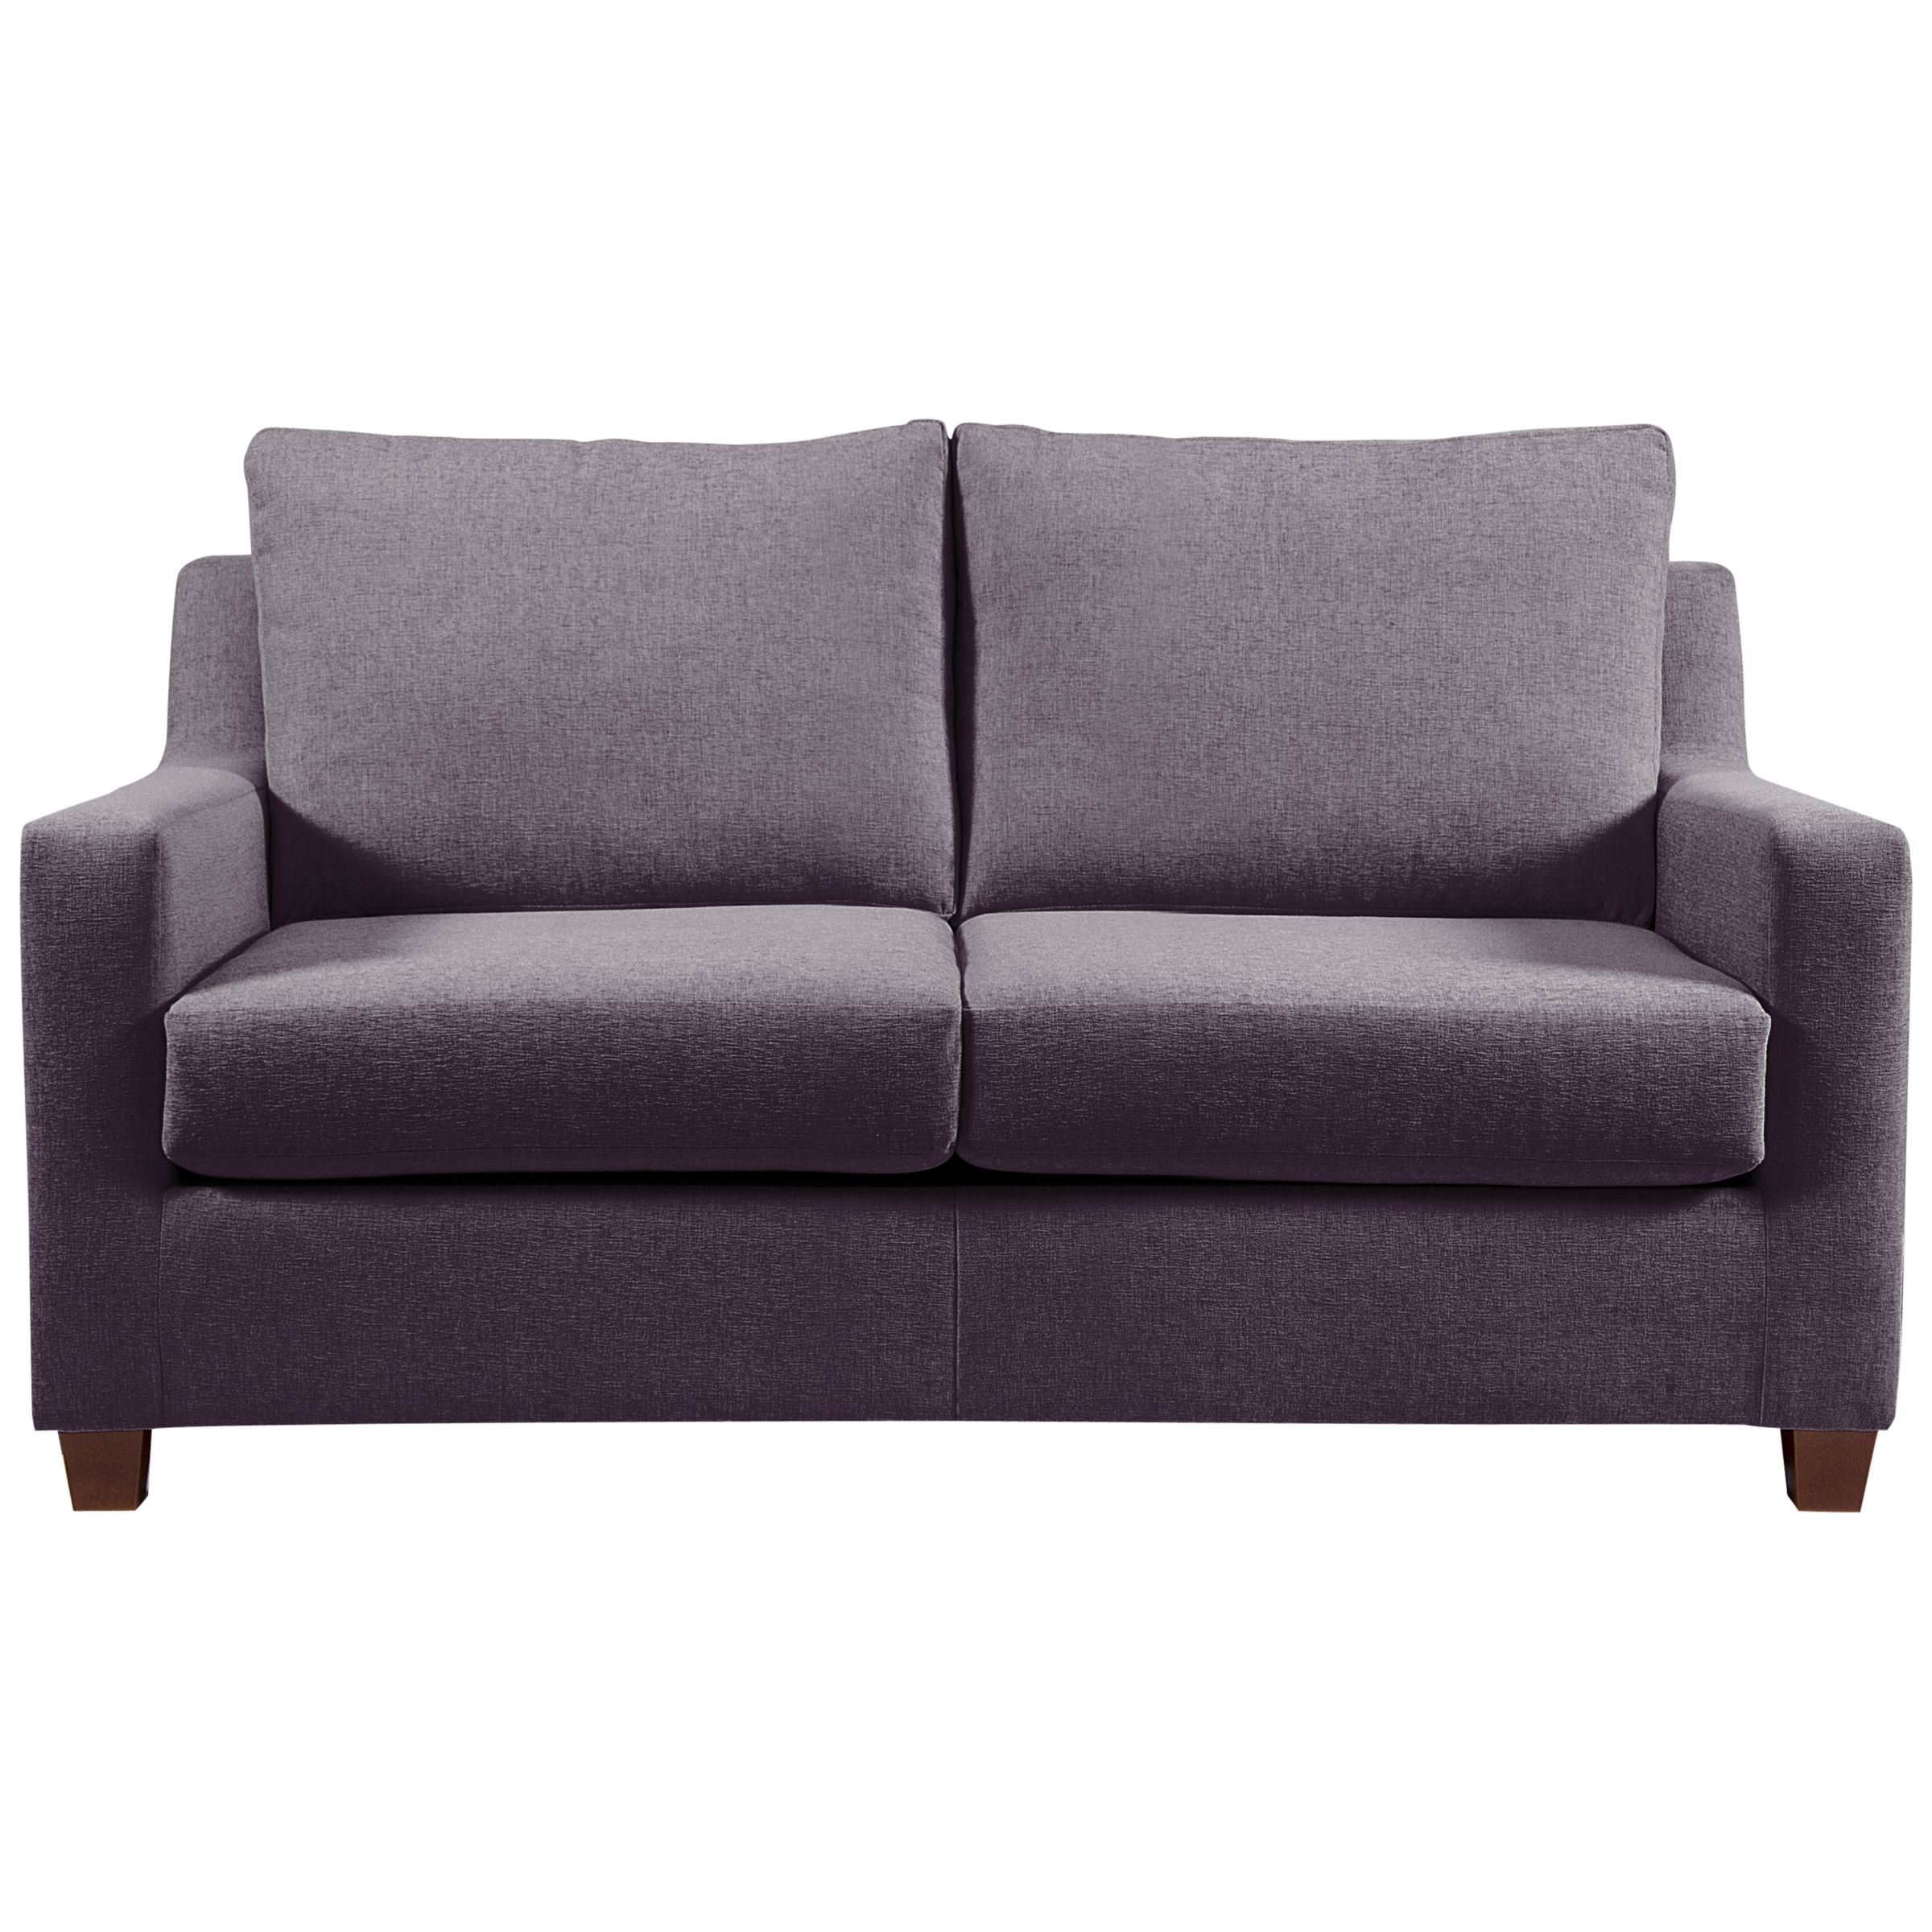 John Lewis Bizet Small Sofa Bed with Memory Foam Mattress, Purple, width 158cm